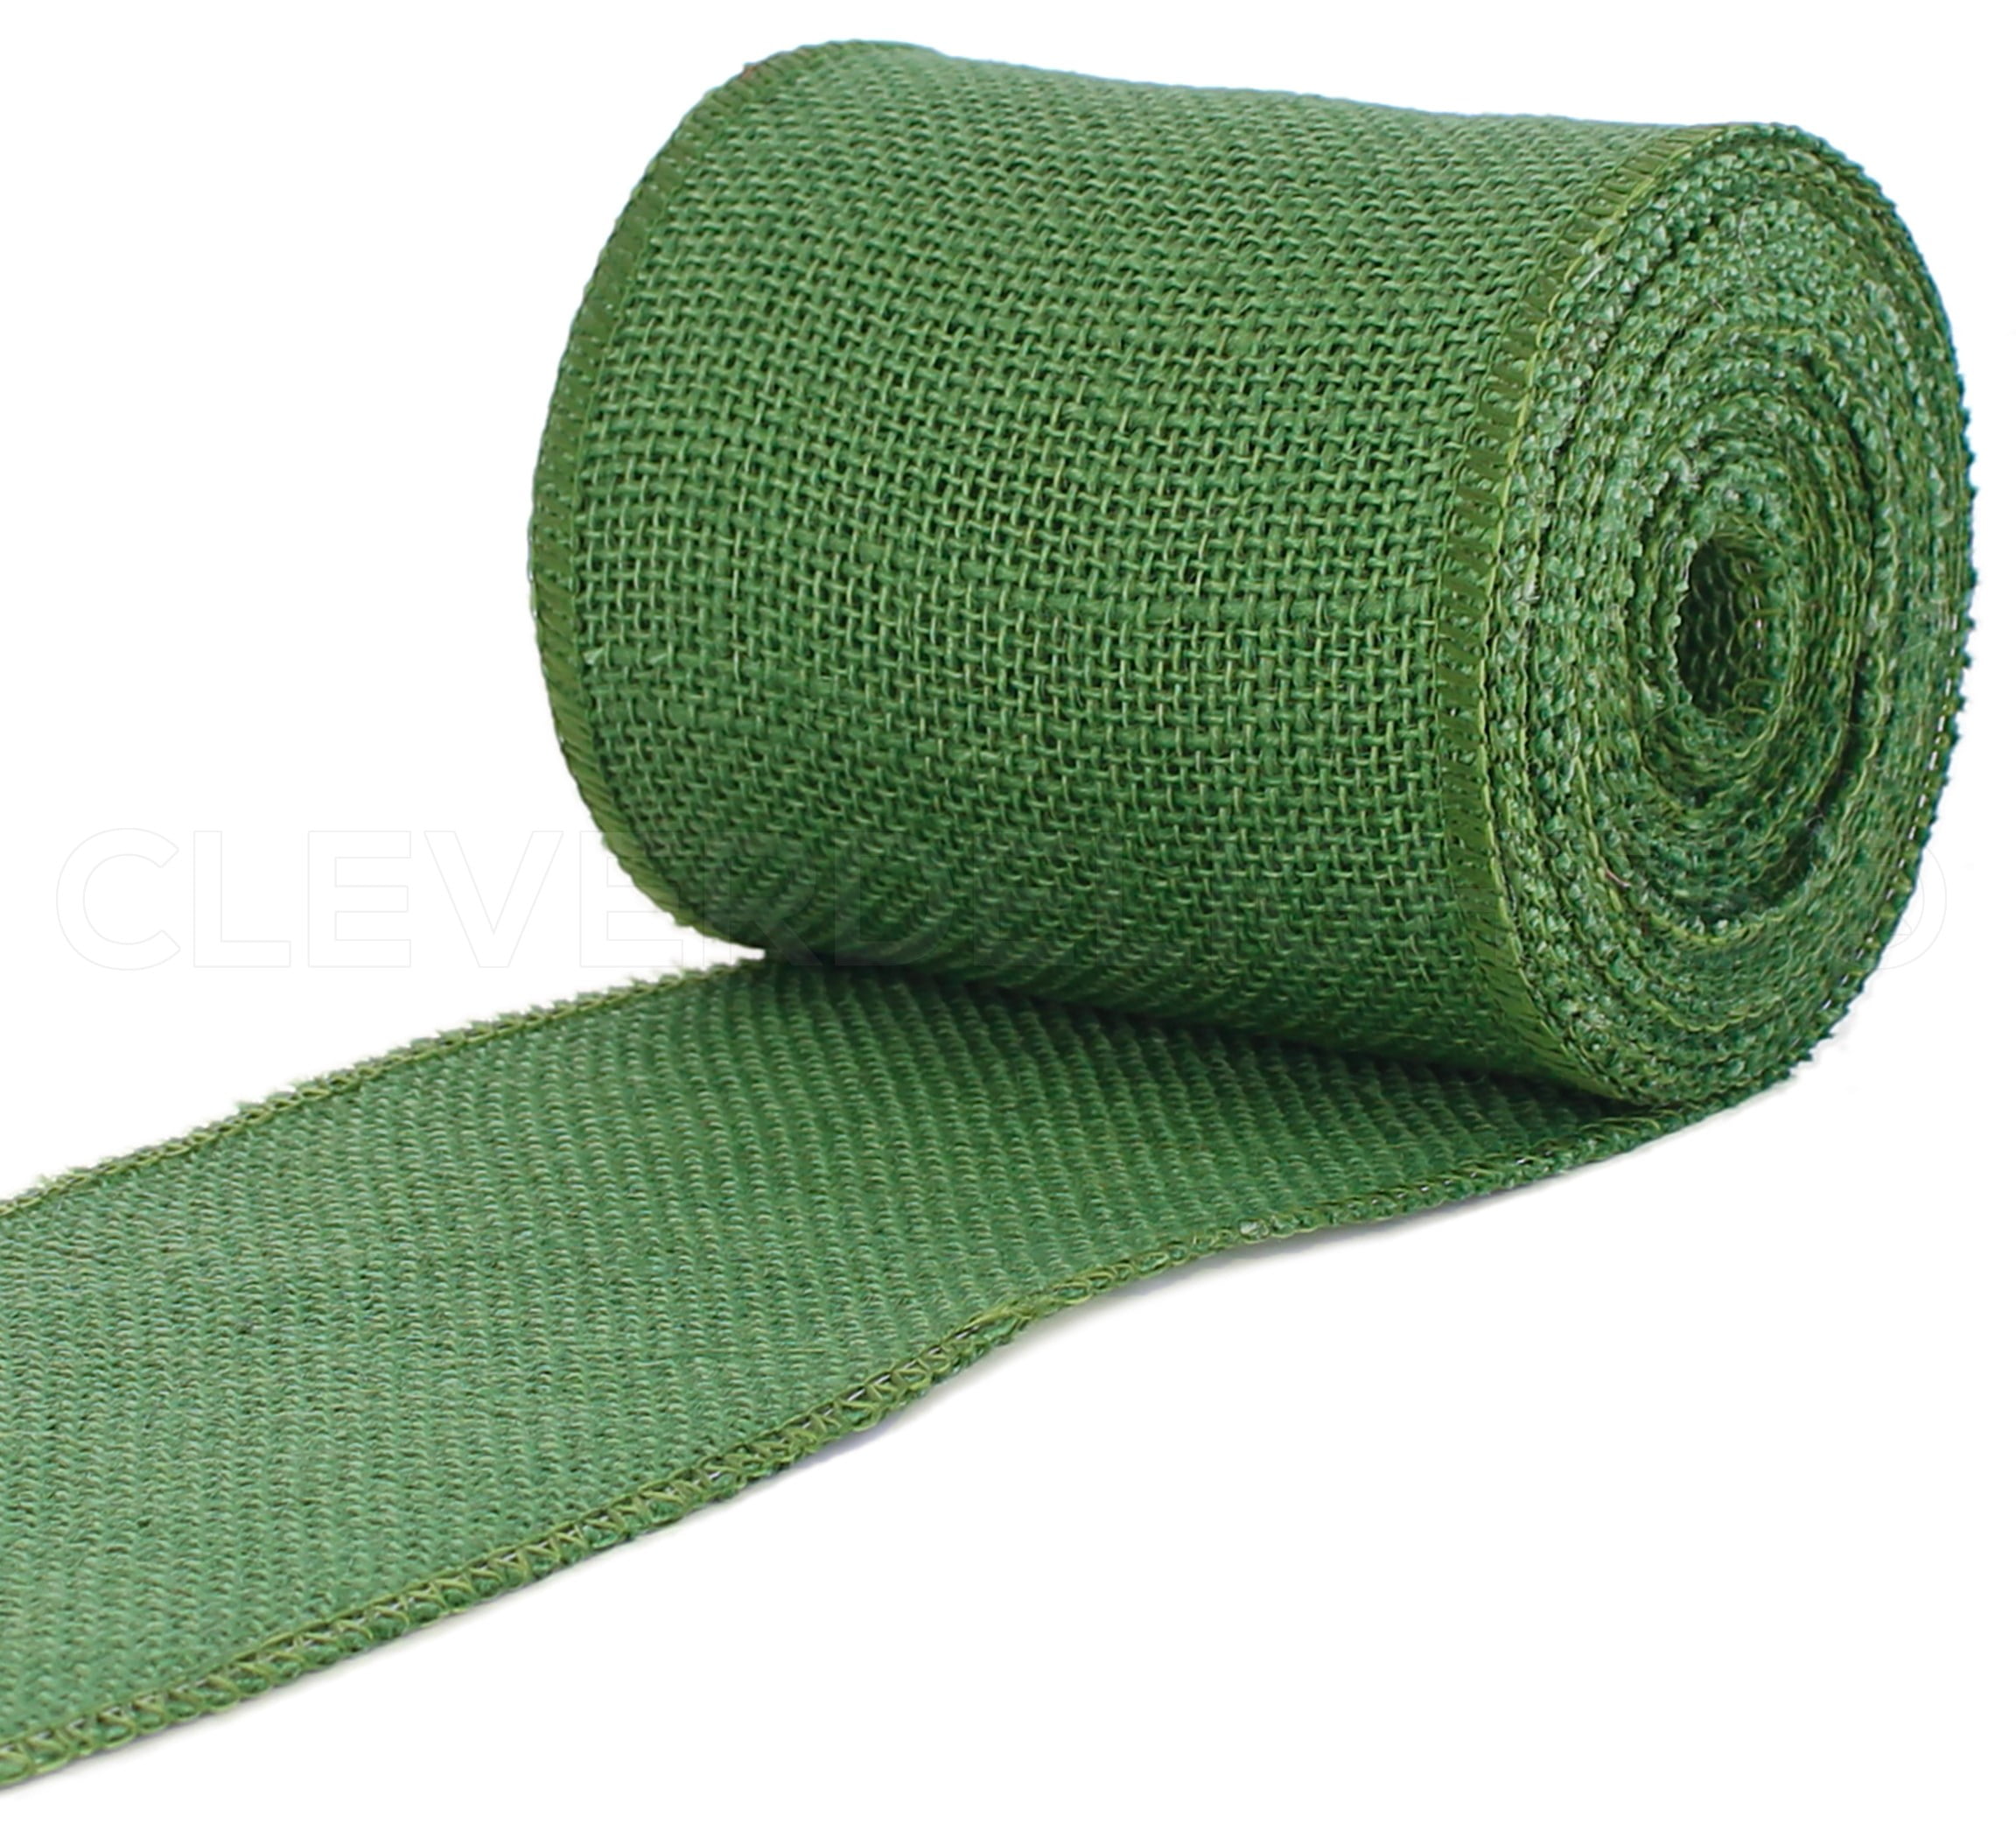 CleverDelights 1 Natural Burlap Ribbon - Finished Edge - 25 Yards - Jute  Burlap Fabric